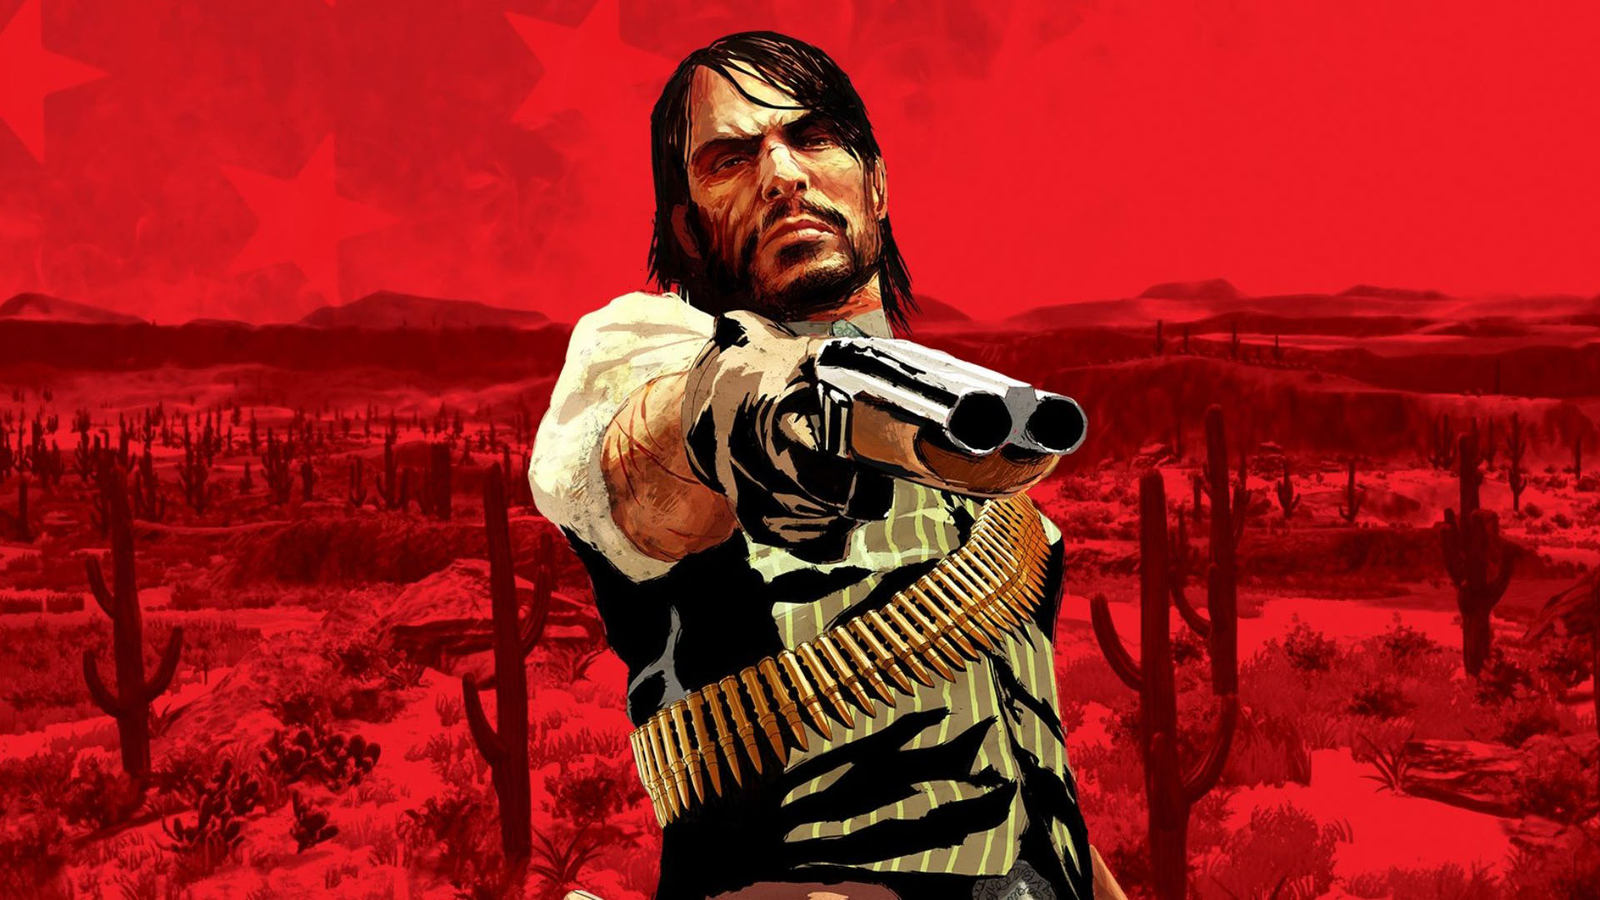 Como jogar Red Dead Online no PS4, Xbox One ou PC